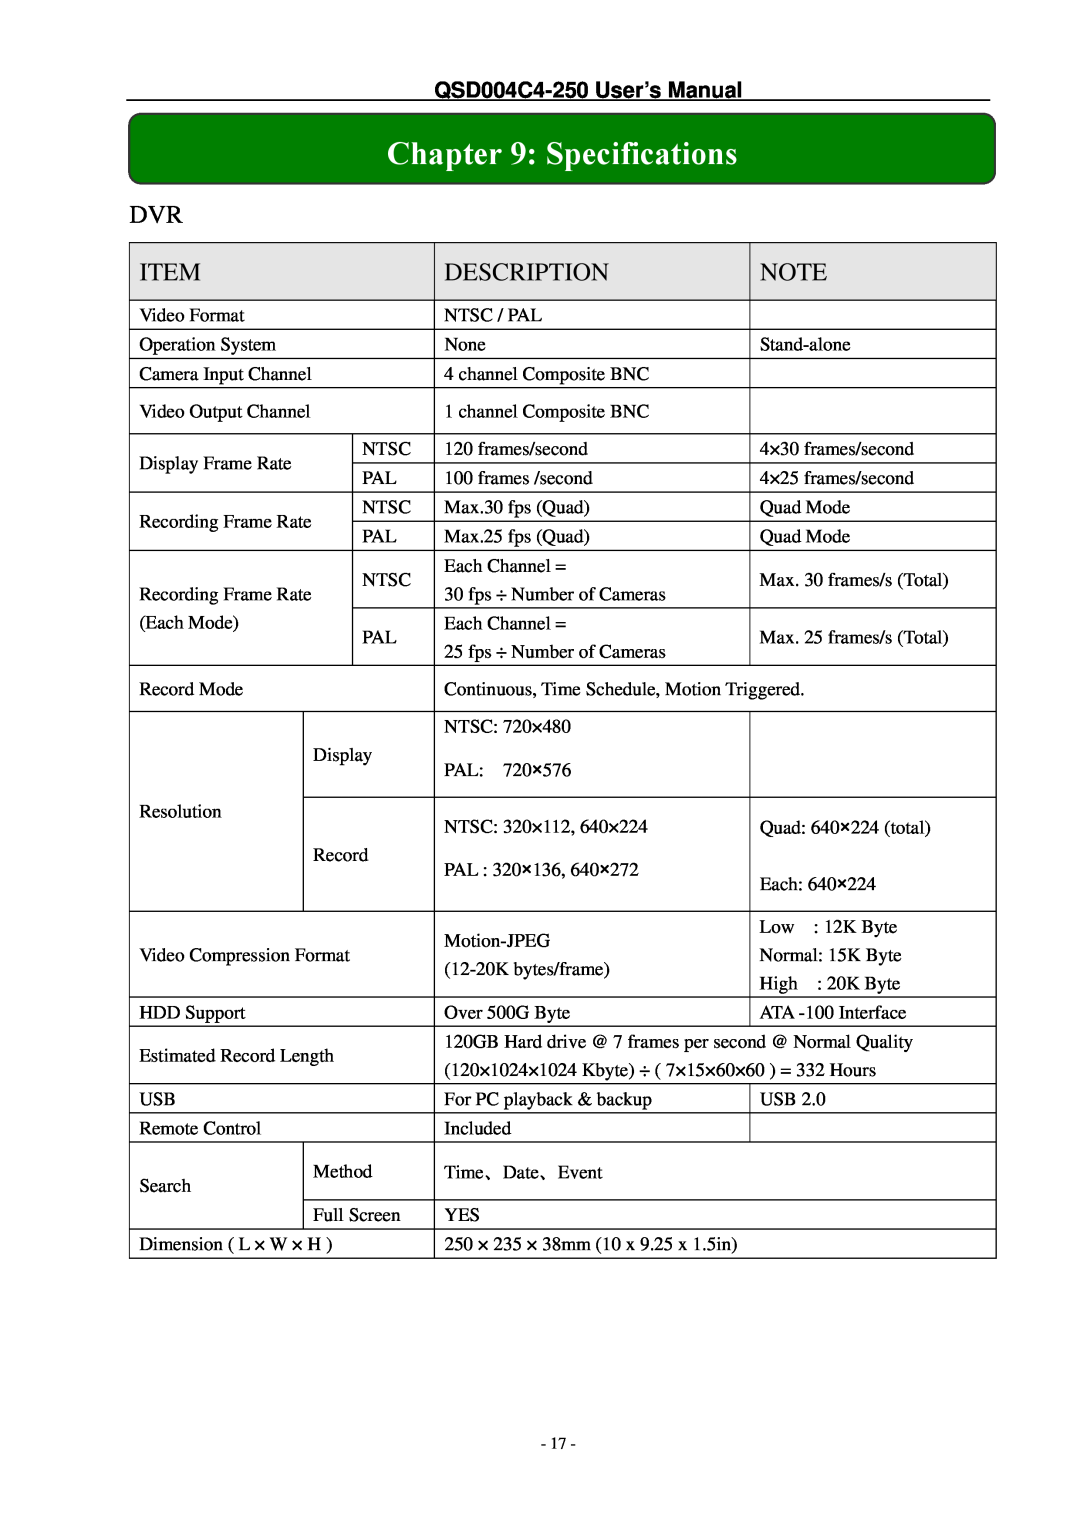 Q-See QSD004C4-250 manual Specifications, Description 